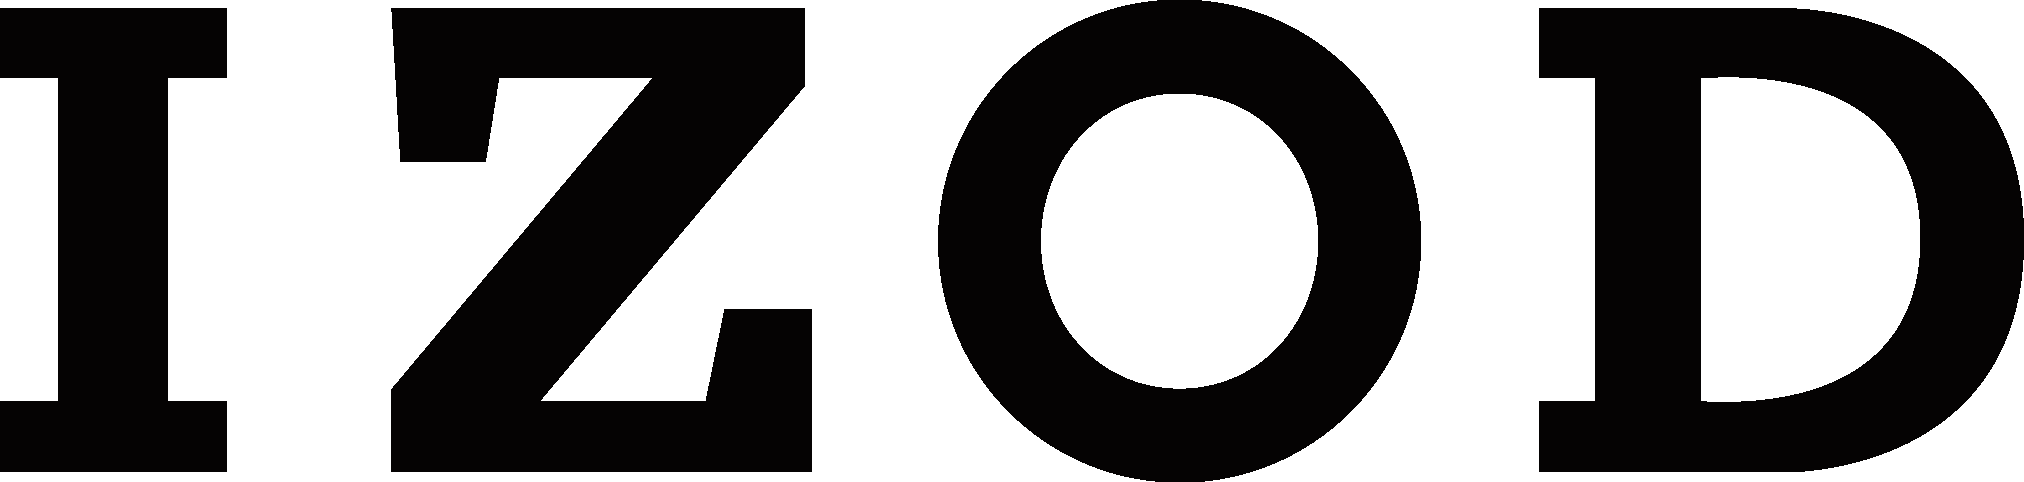 IZOD Logo png